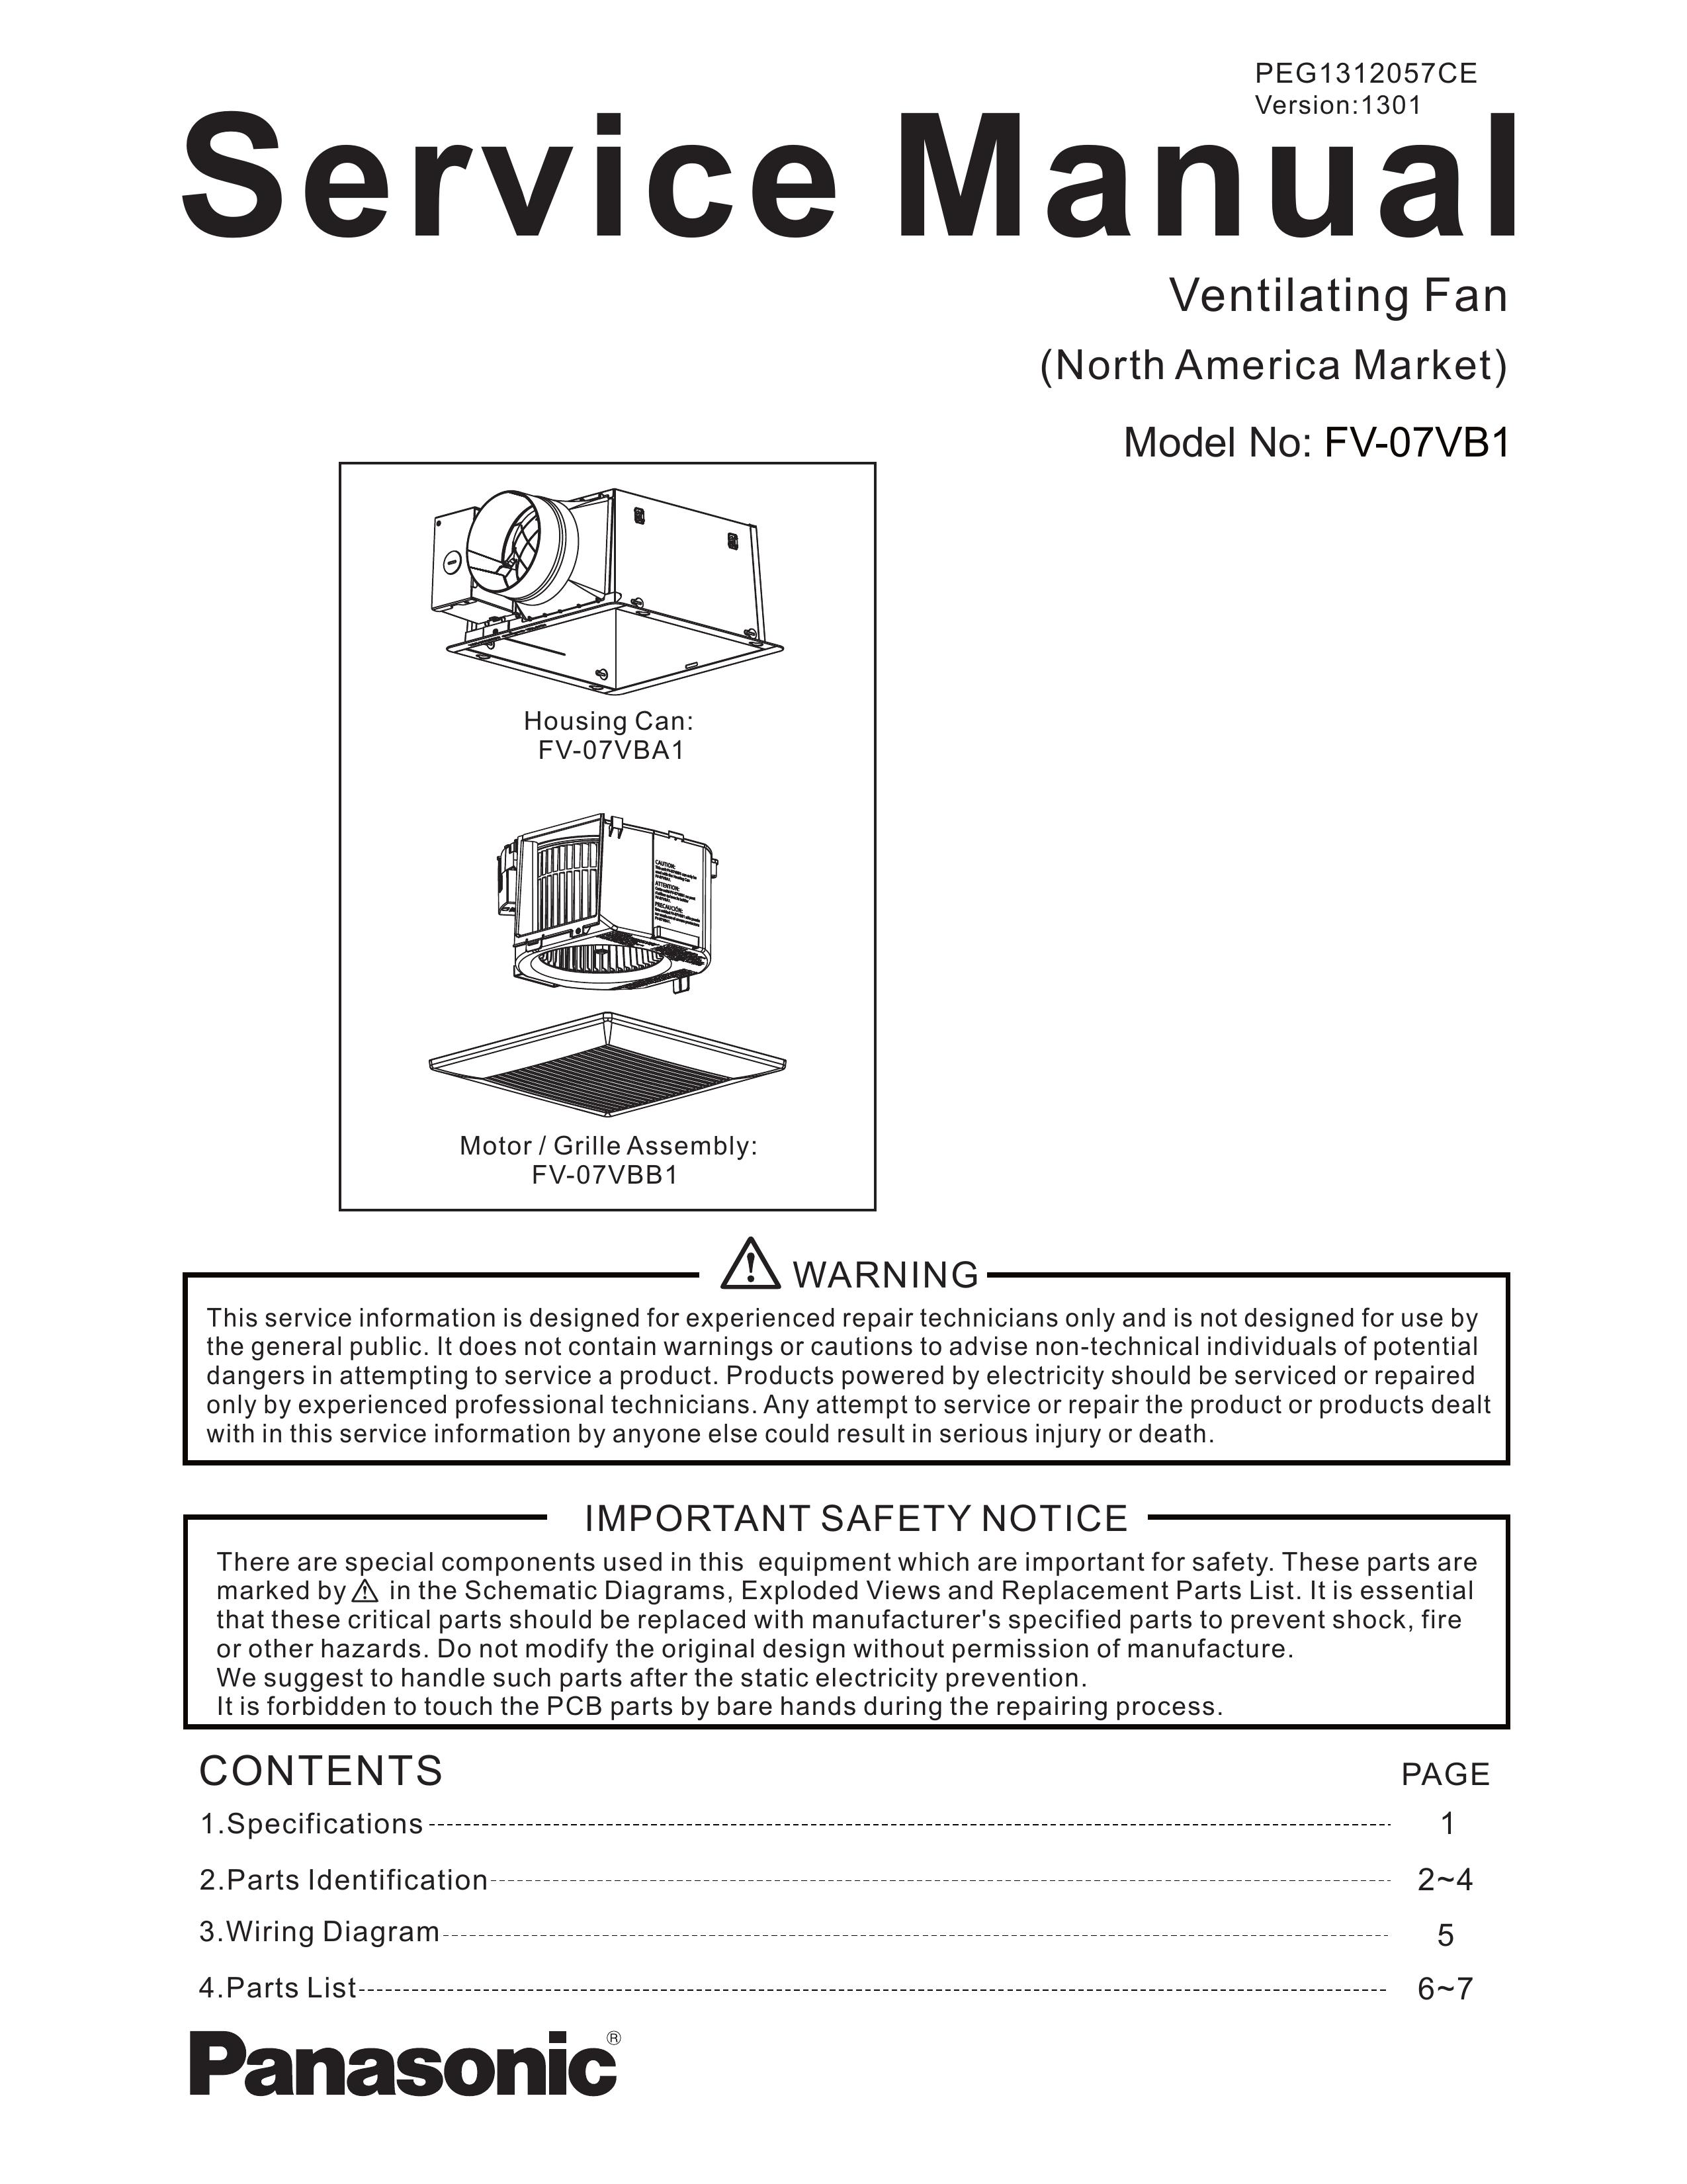 Panasonic FV-07VB1 Ventilation Hood User Manual